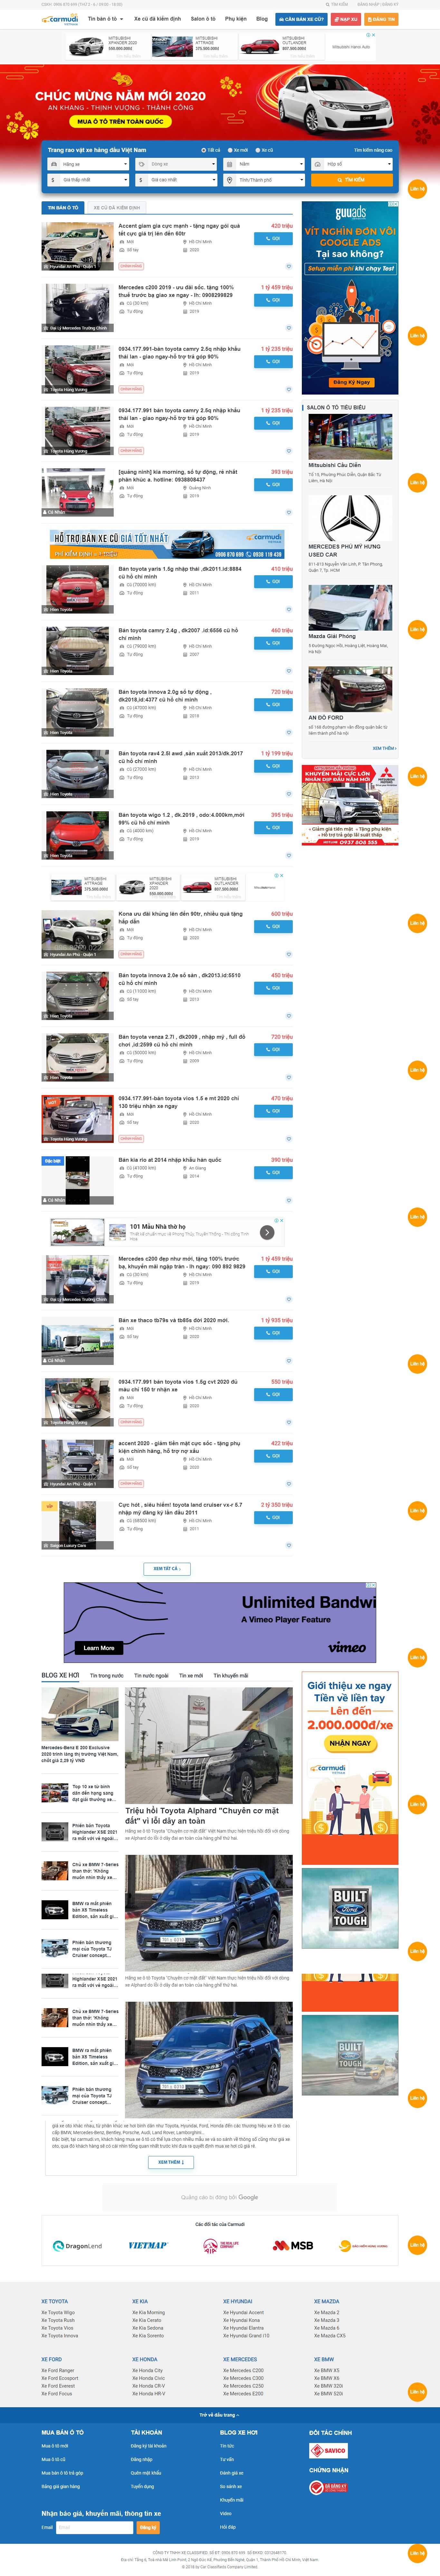 Thiết kế Website bán xe hơi - www.carmudi.vn